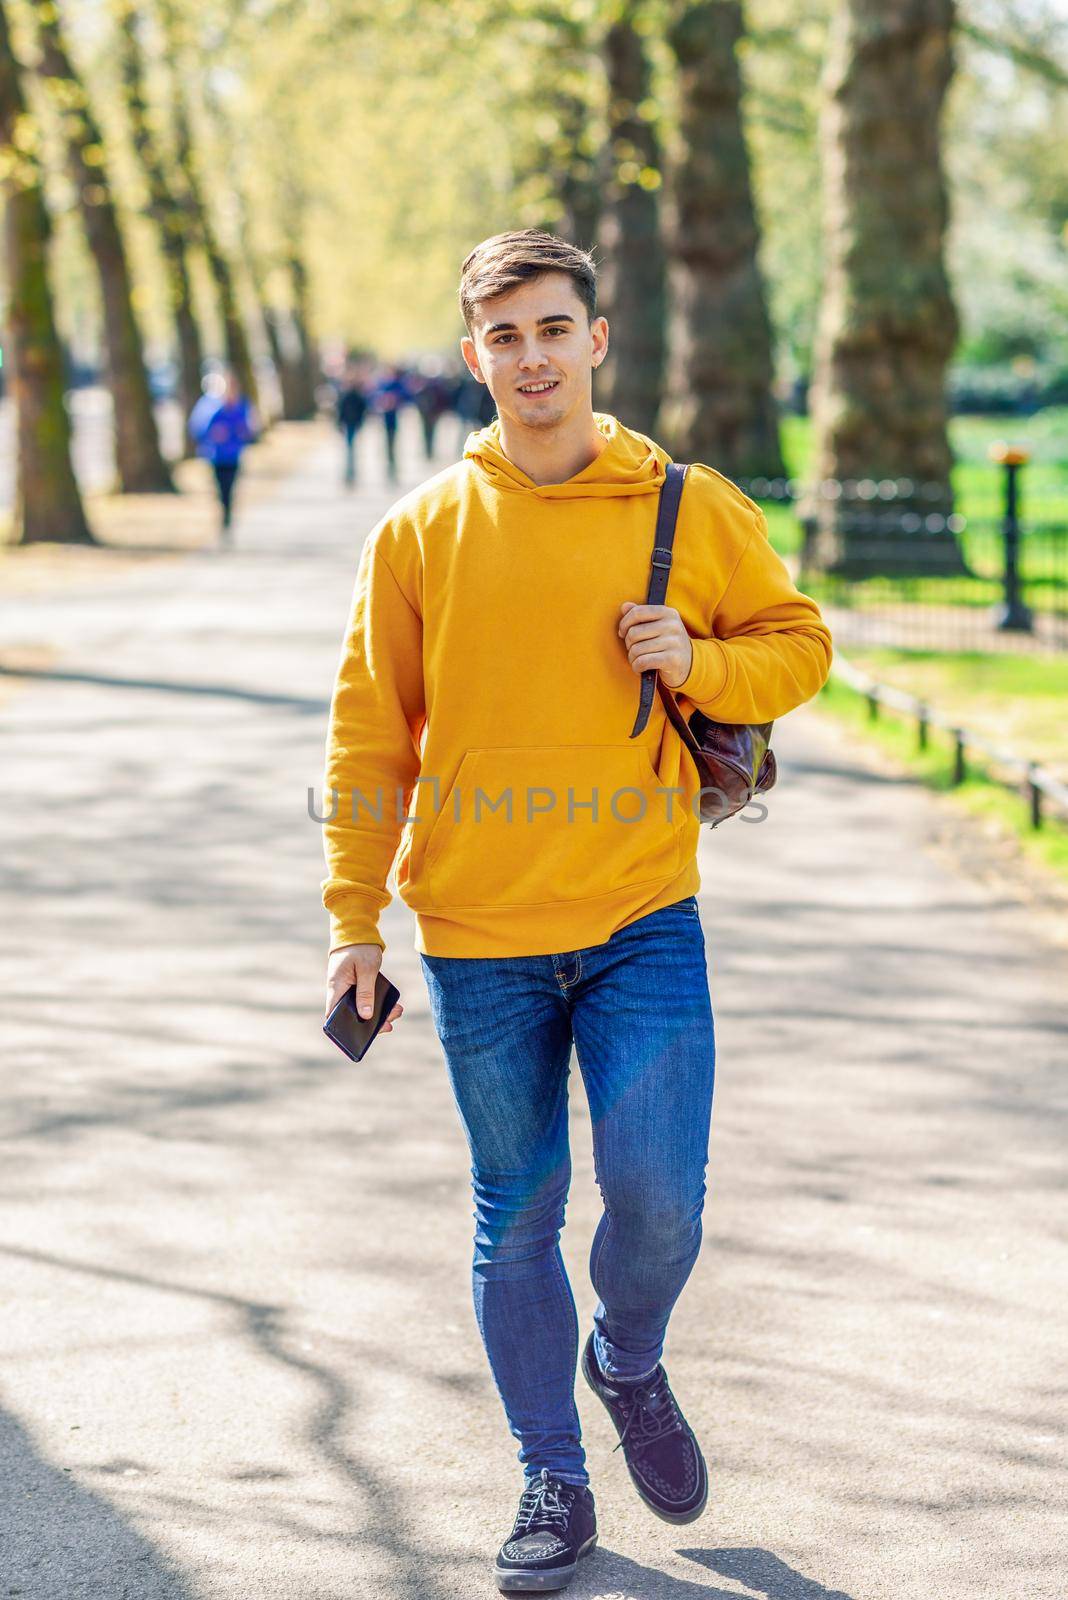 Young urban man using smartphone walking in street in an urban park in London, UK.